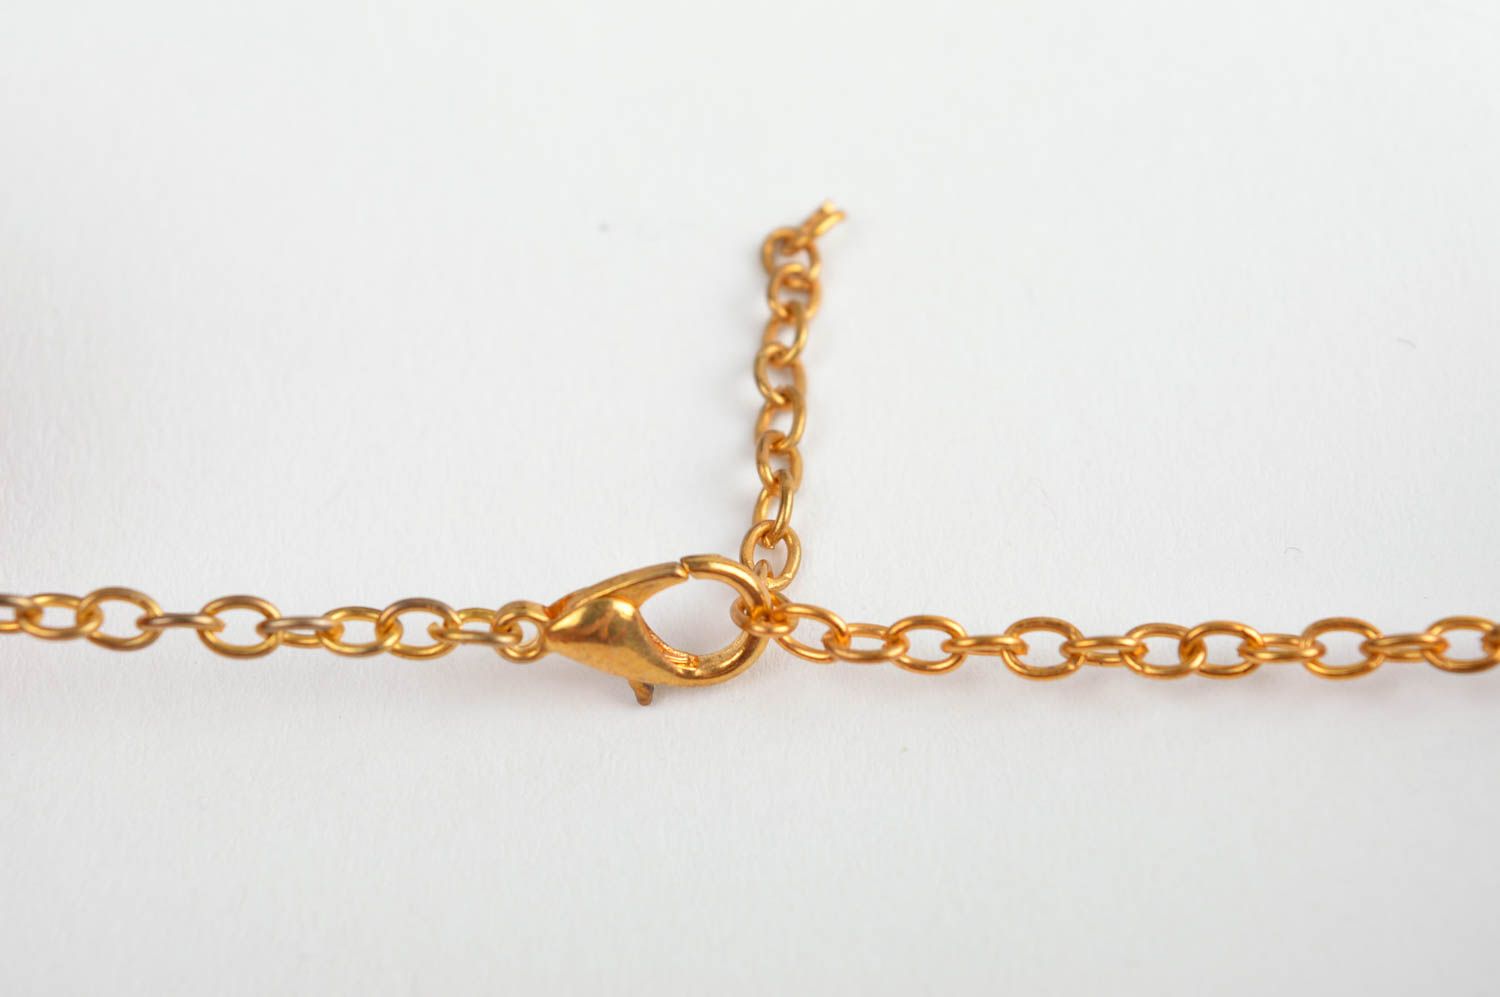 Stylish handmade textile necklace braided thread necklace gemstone bead necklace photo 4